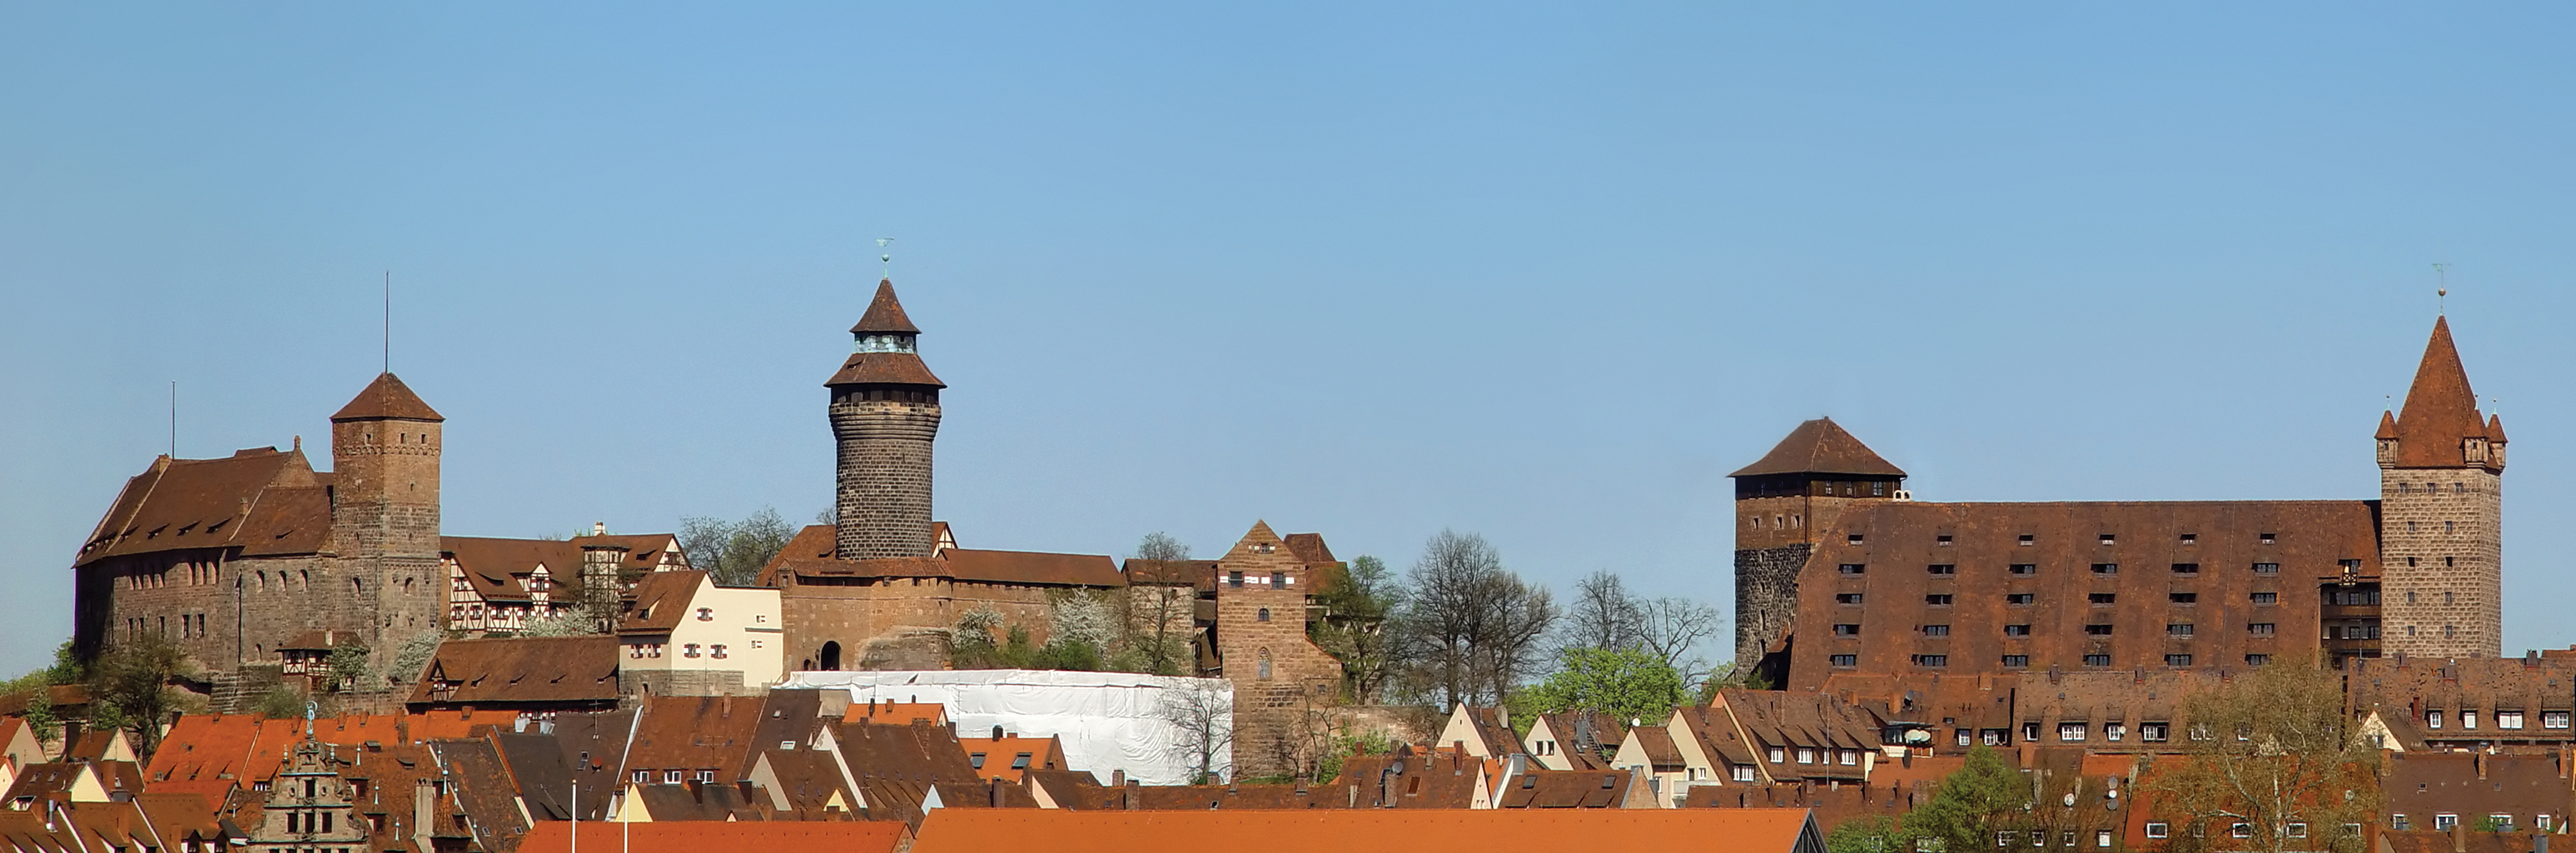 Nuremberg Castle - Wikipedia